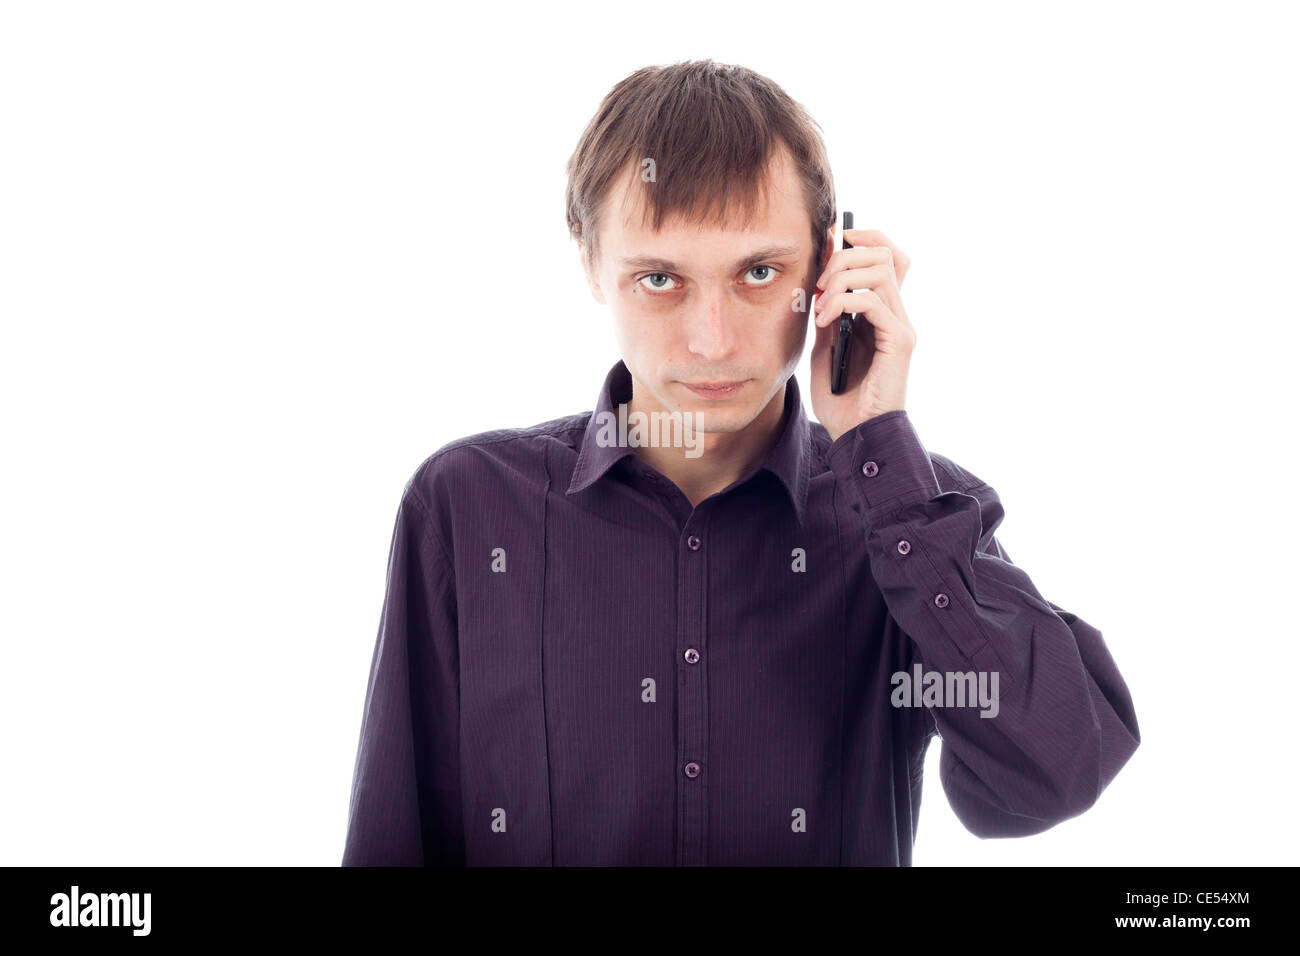 Serious weirdo man on the phone, isolated on white background. Stock Photo